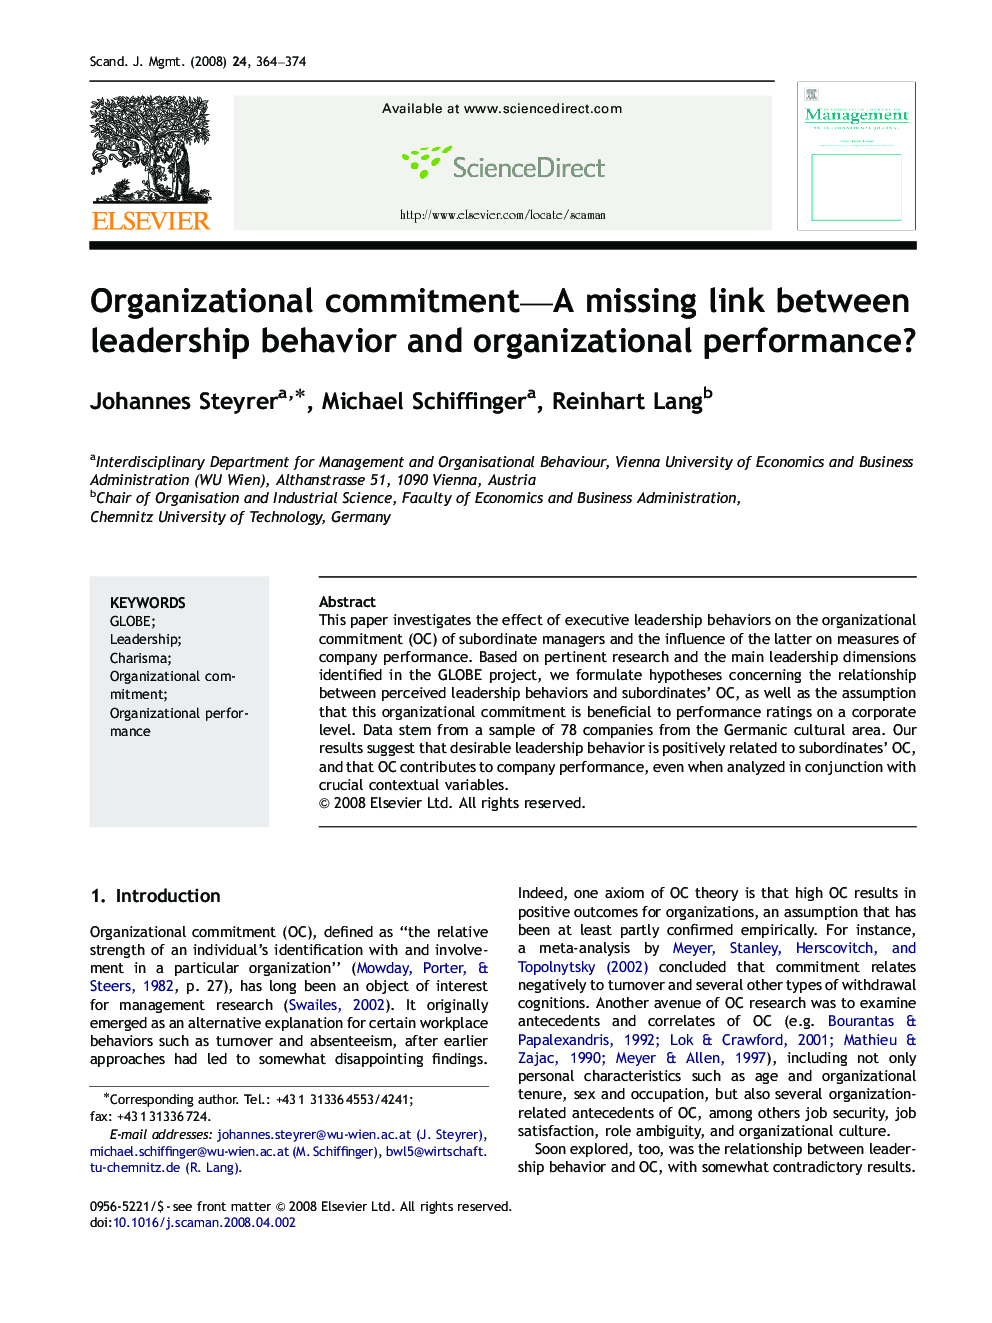 Organizational commitment—A missing link between leadership behavior and organizational performance?